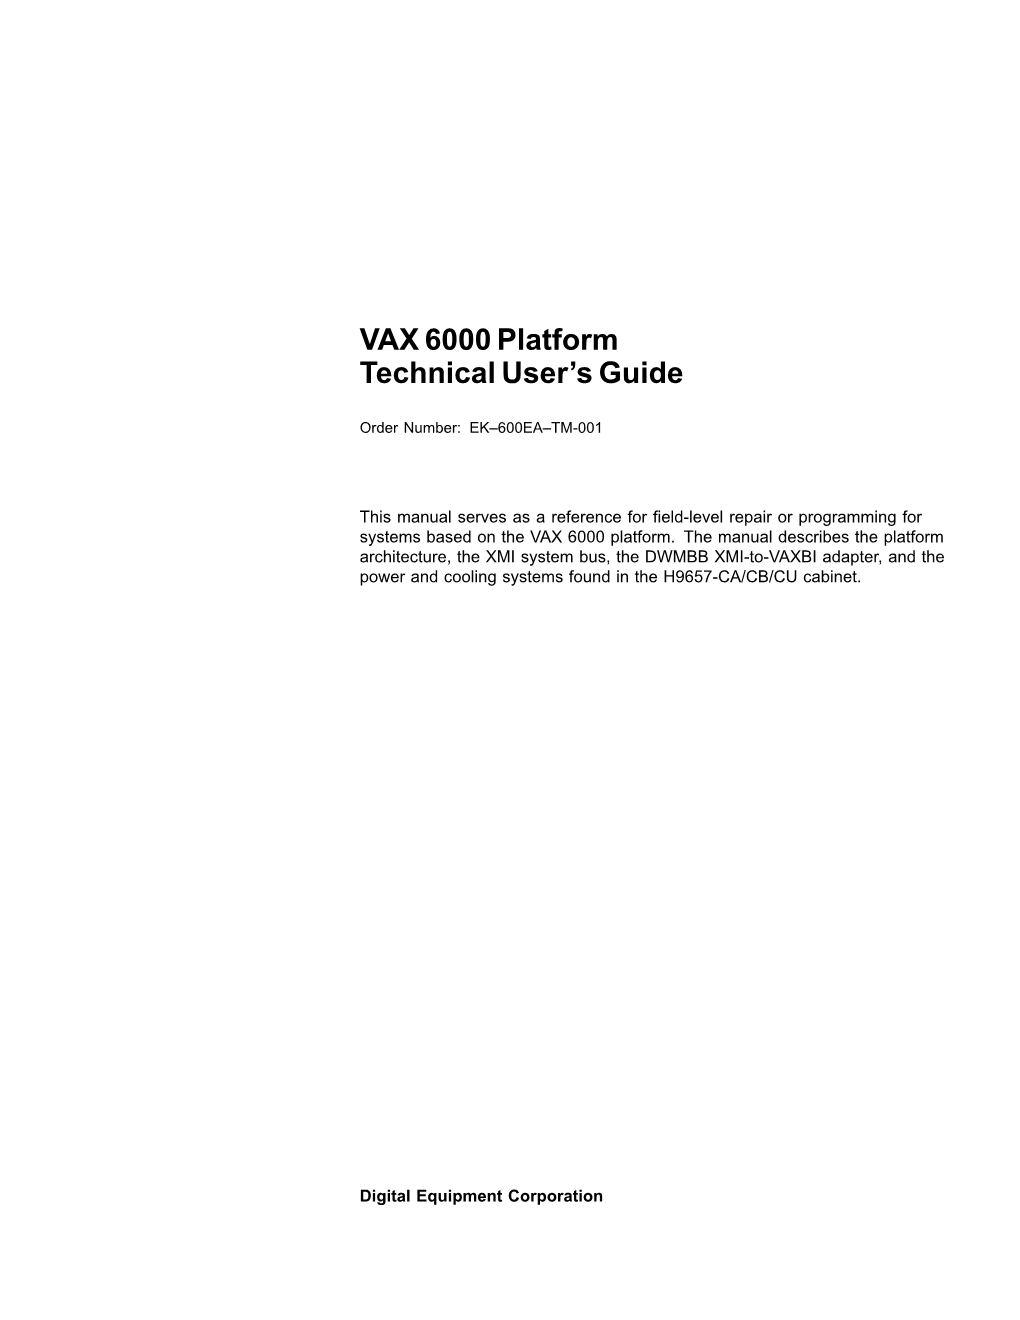 VAX 6000 Platform Technical User's Guide